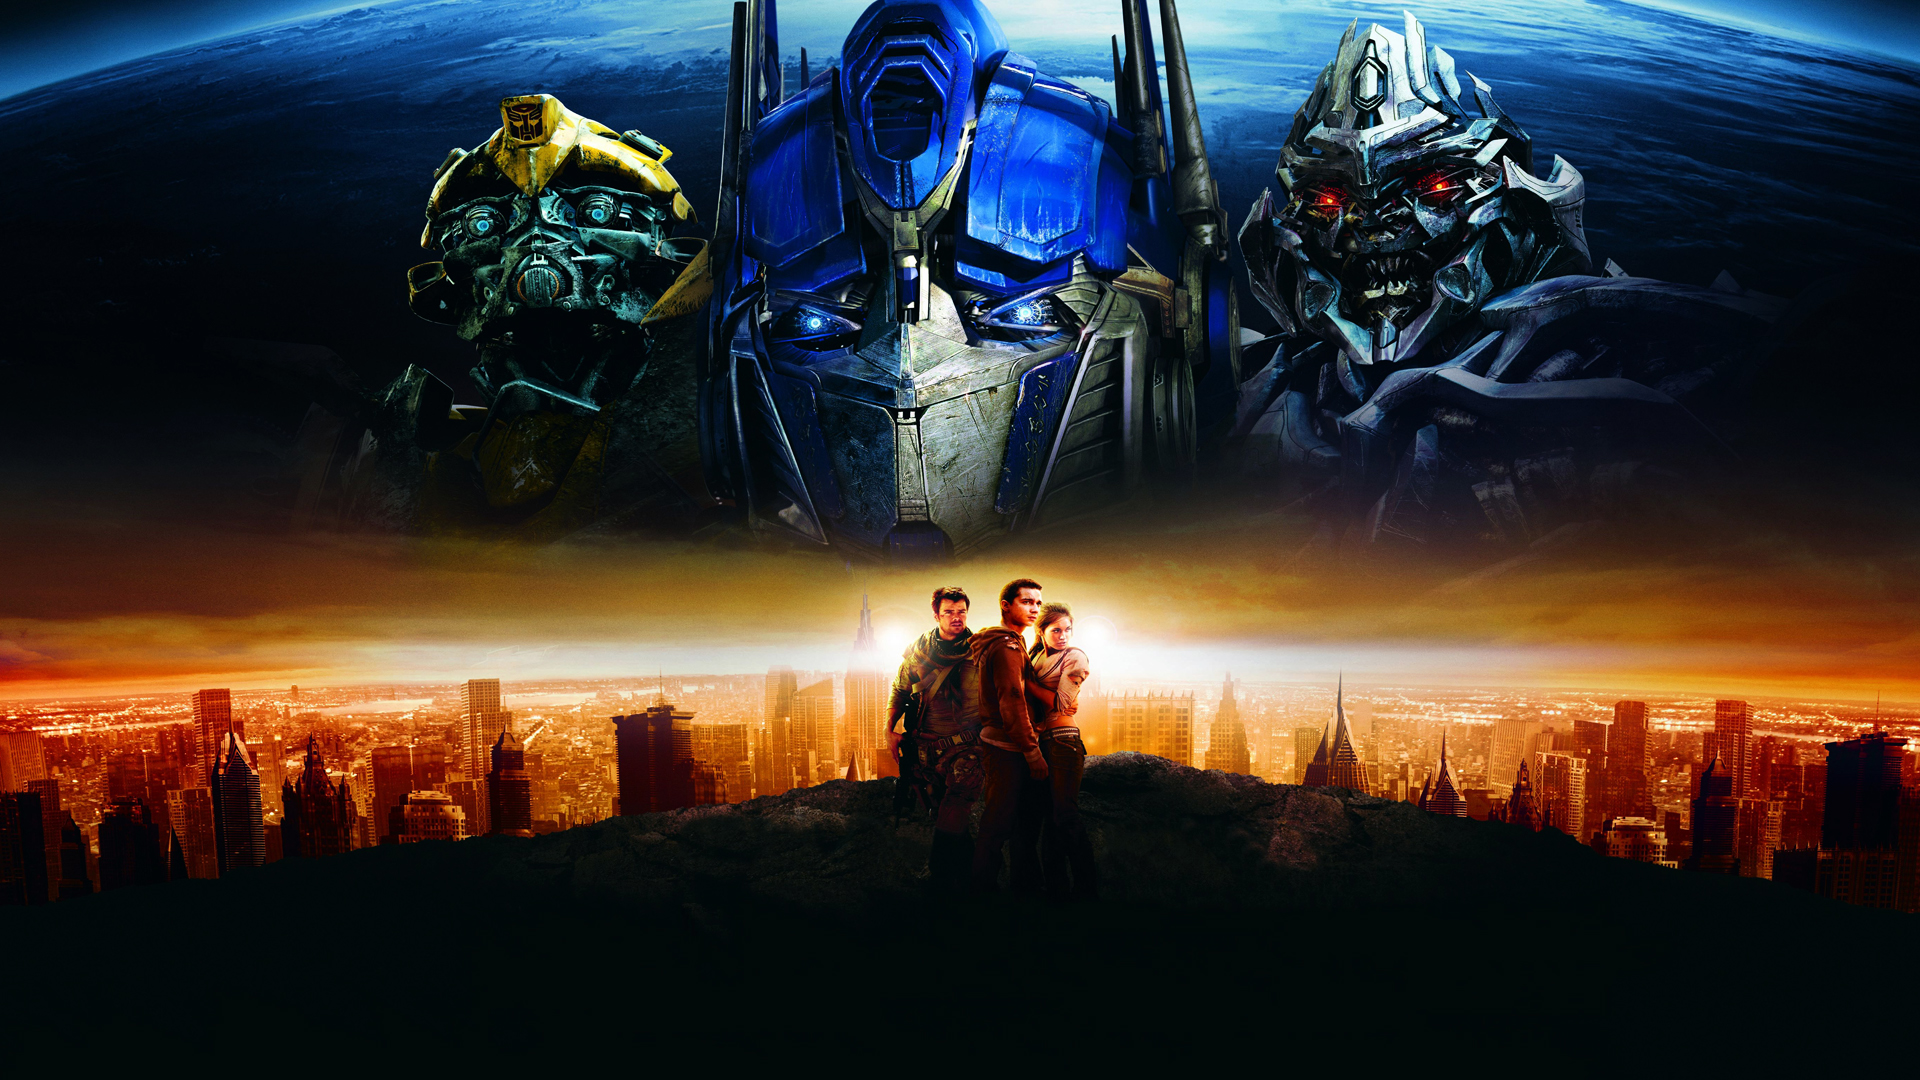 Transformers Wallpapers Hd - Transformers 1 - HD Wallpaper 